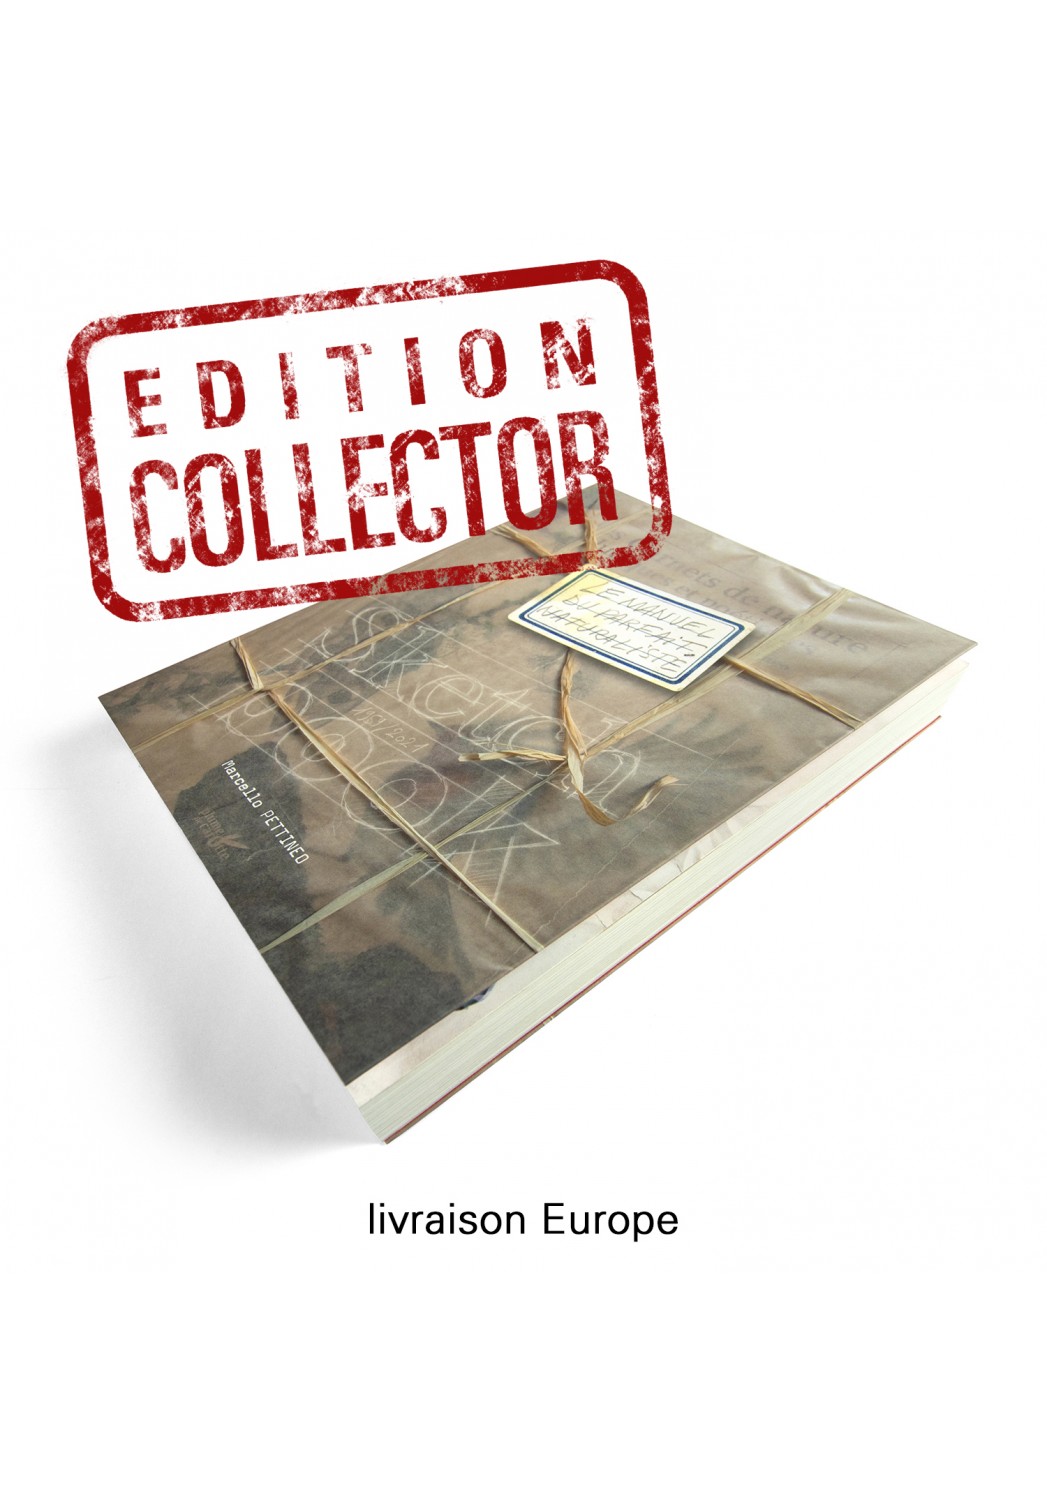 Marcello-art: Books Marcello-art: The Manual collector edition : delivery europe